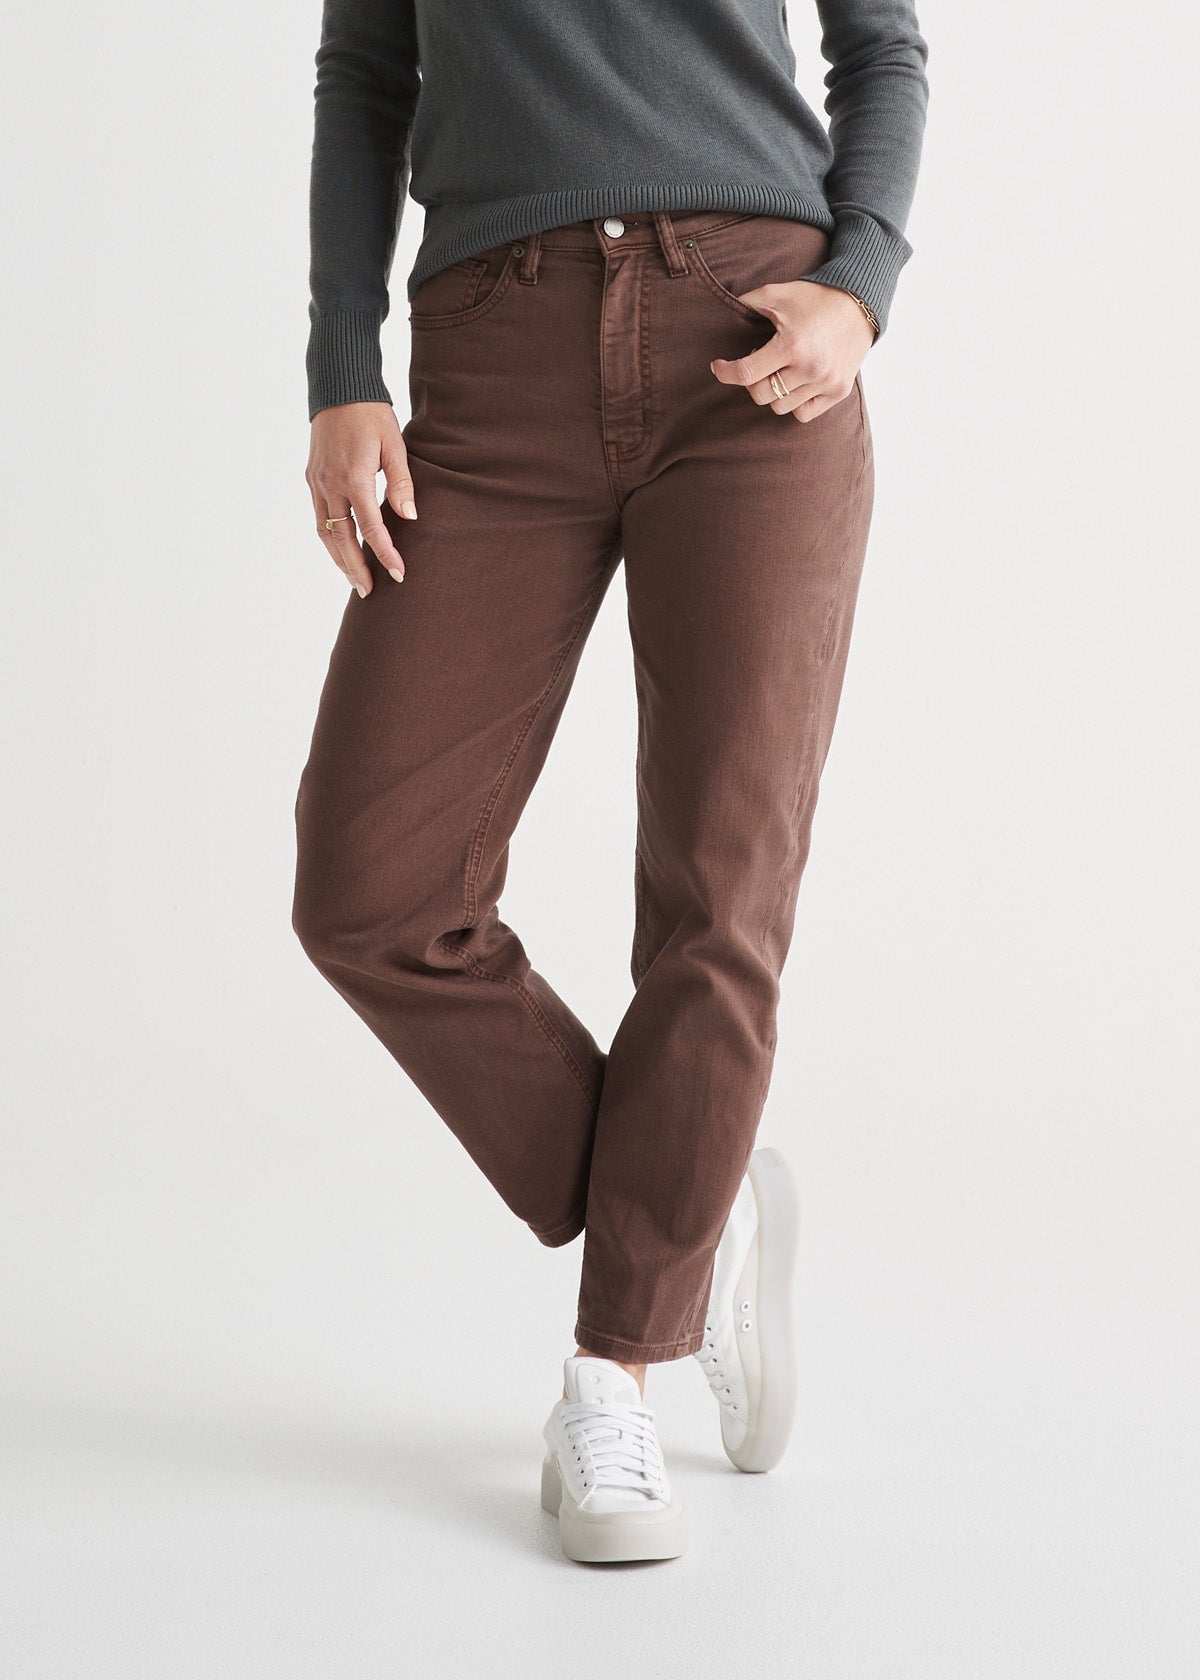 Women's cotton slacks low waist stretch straight office wear pants size  6x29.5